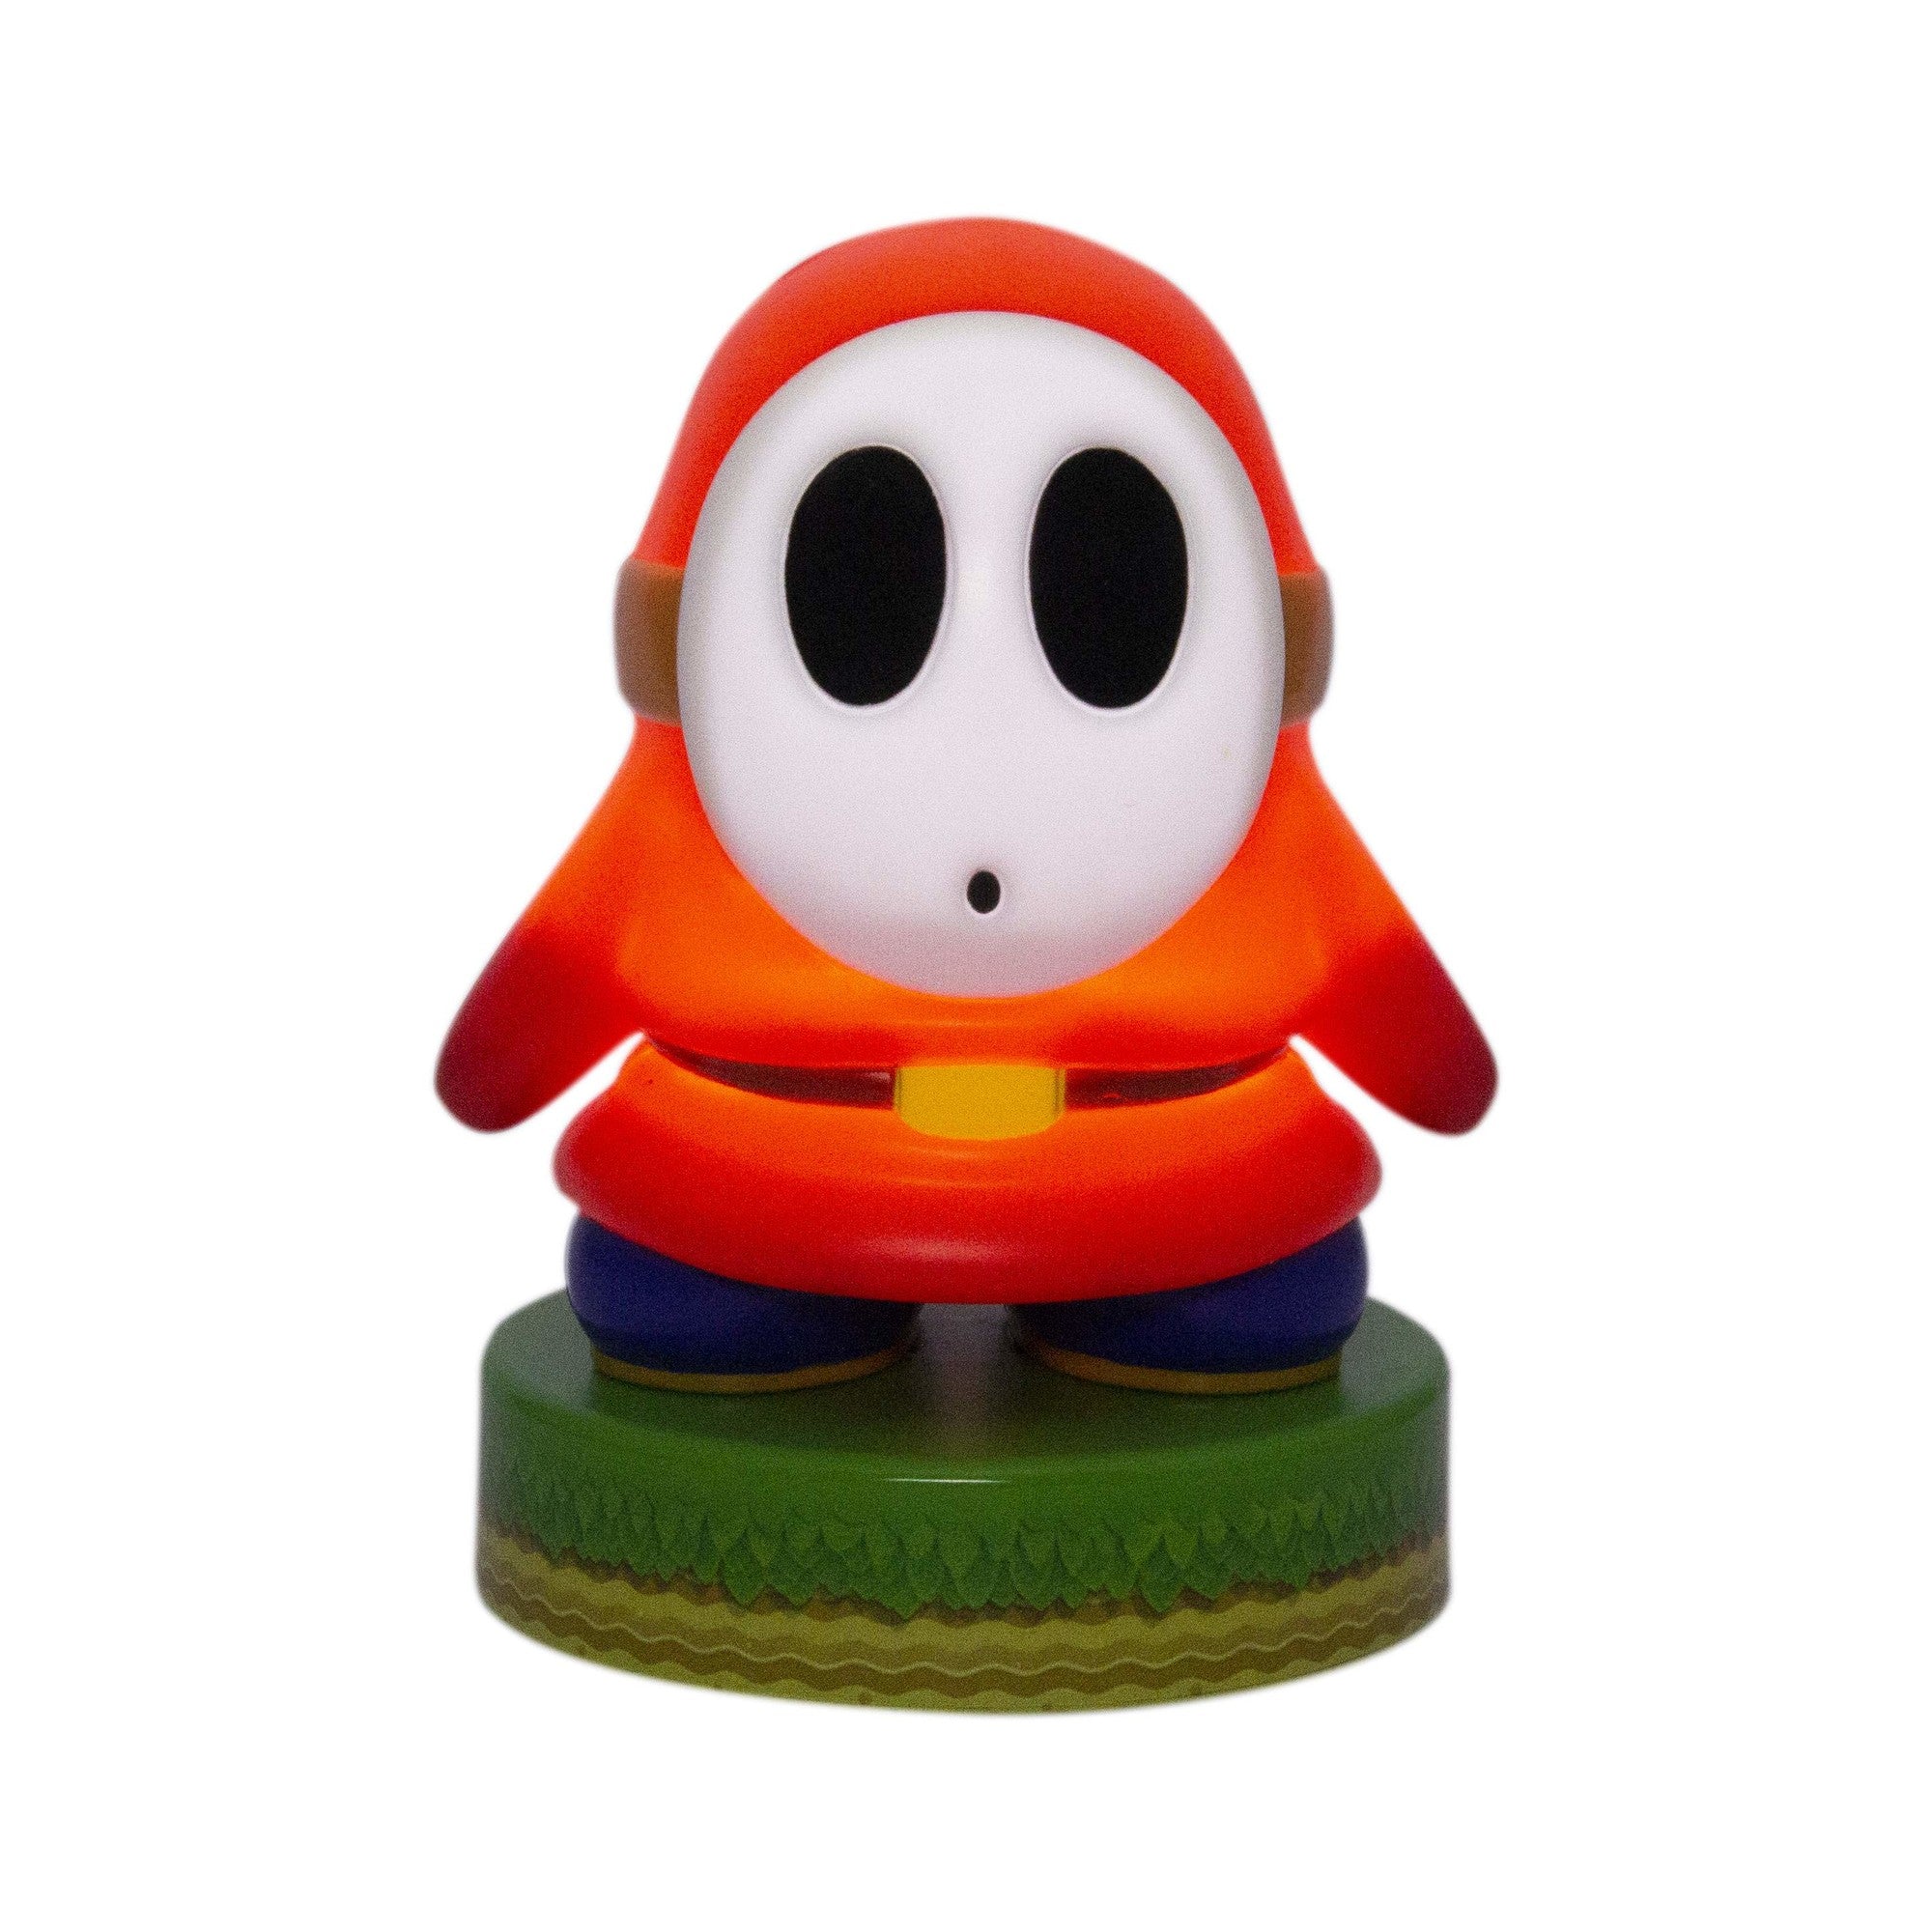  Super Mario: Shy Guy Icon Light  5055964738525